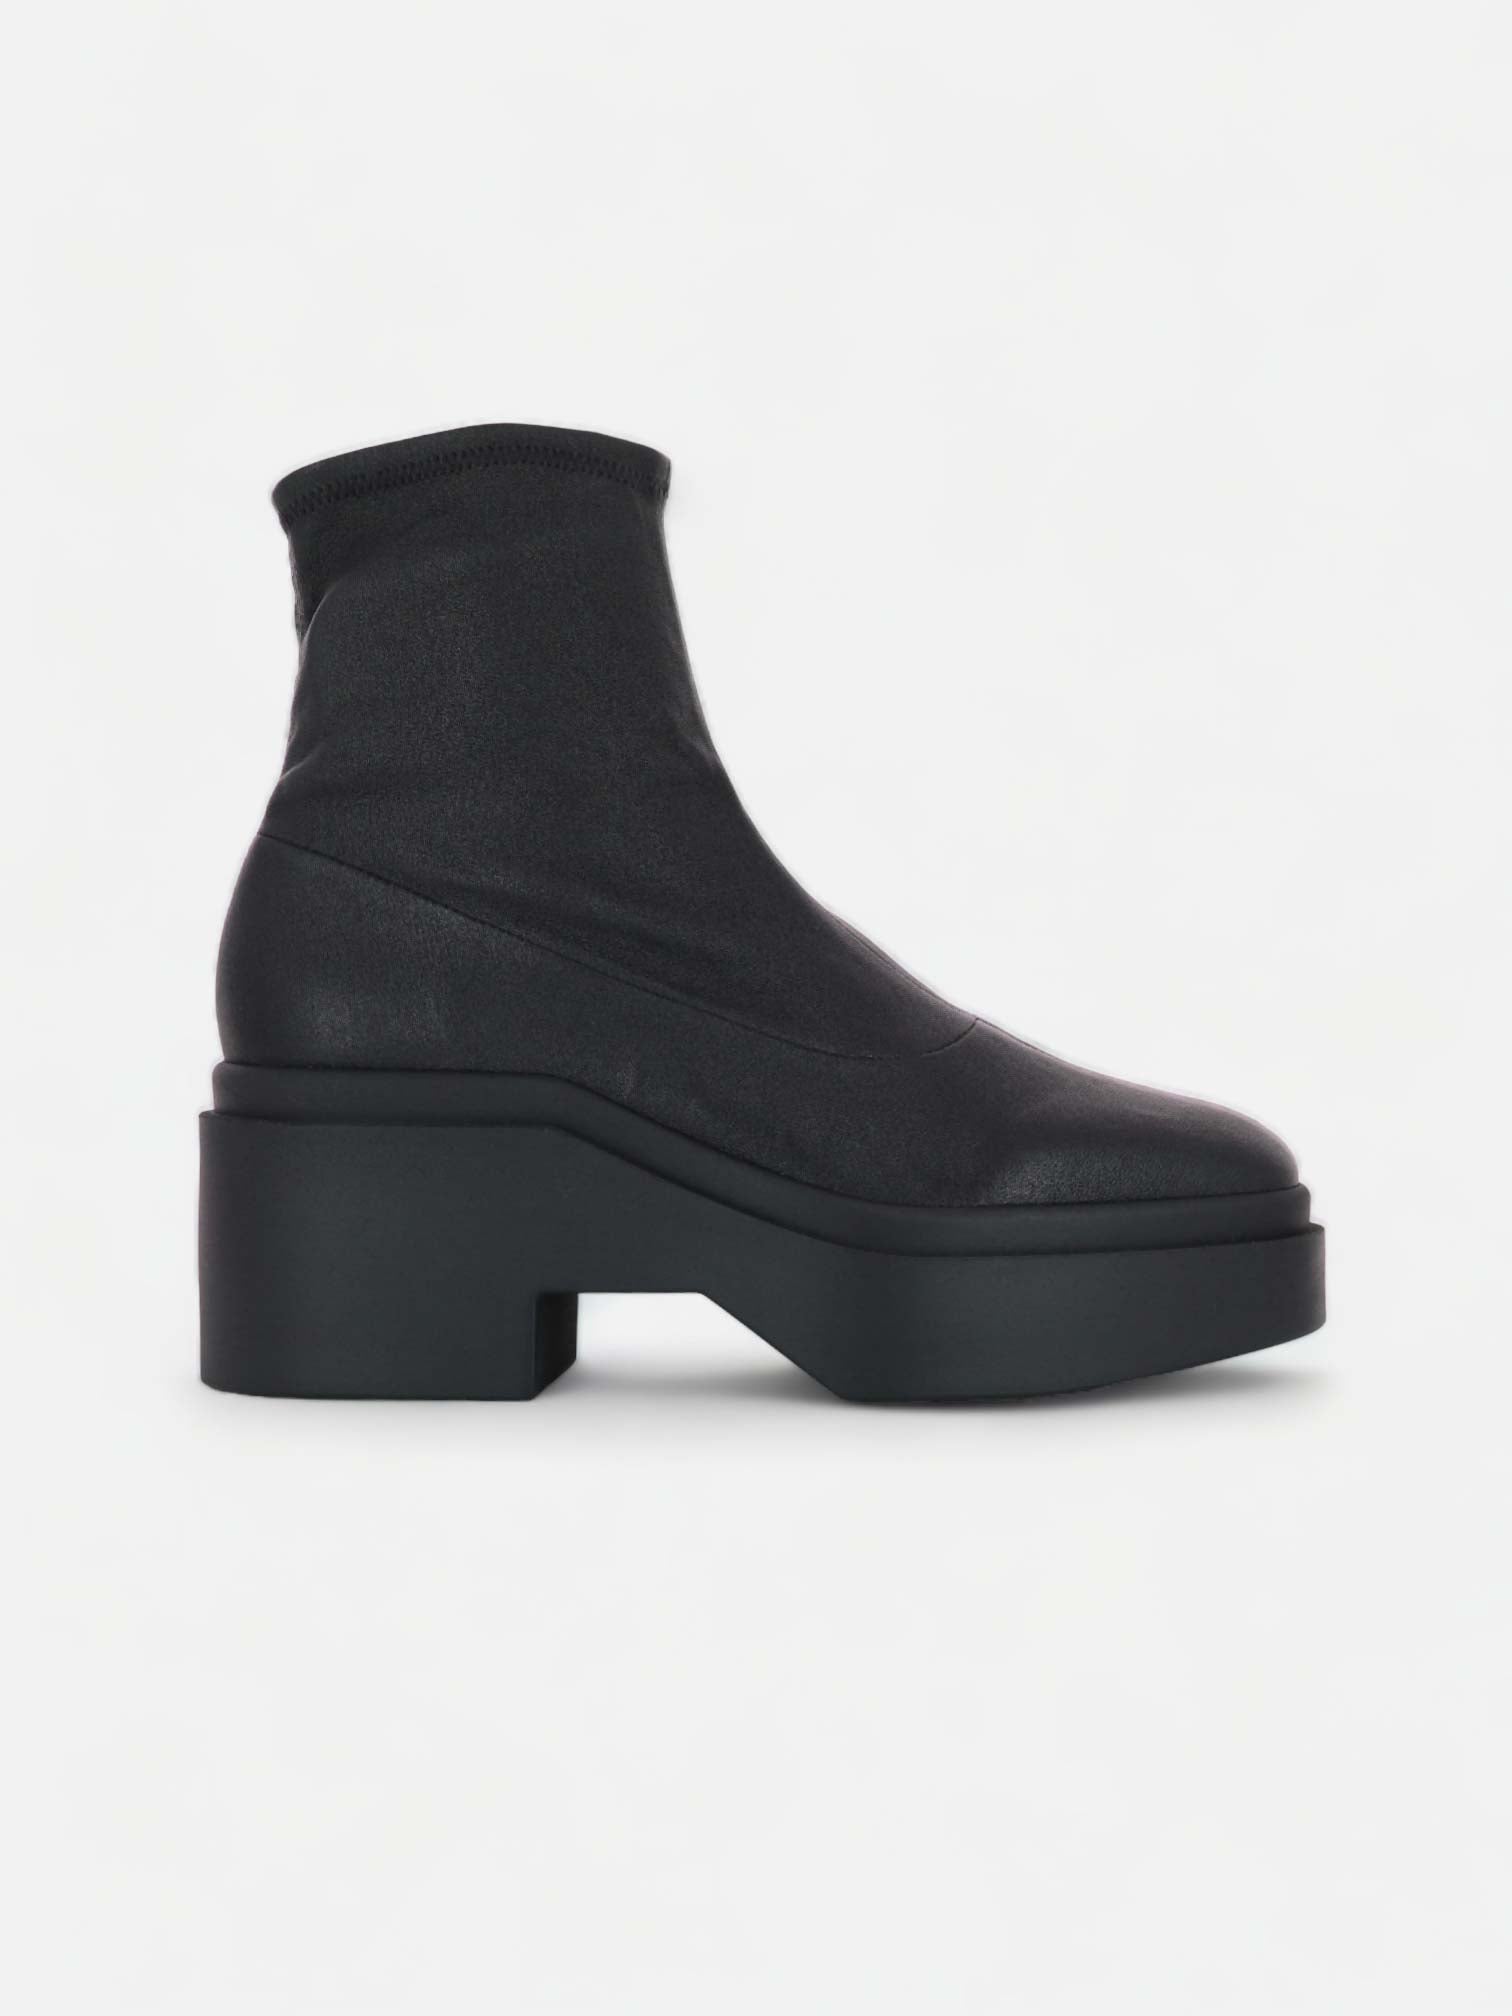 ANKLE BOOTS - NELLE ankle boots, stretch lambskin black - NELLEBLKNPSM340 - Clergerie Paris - USA